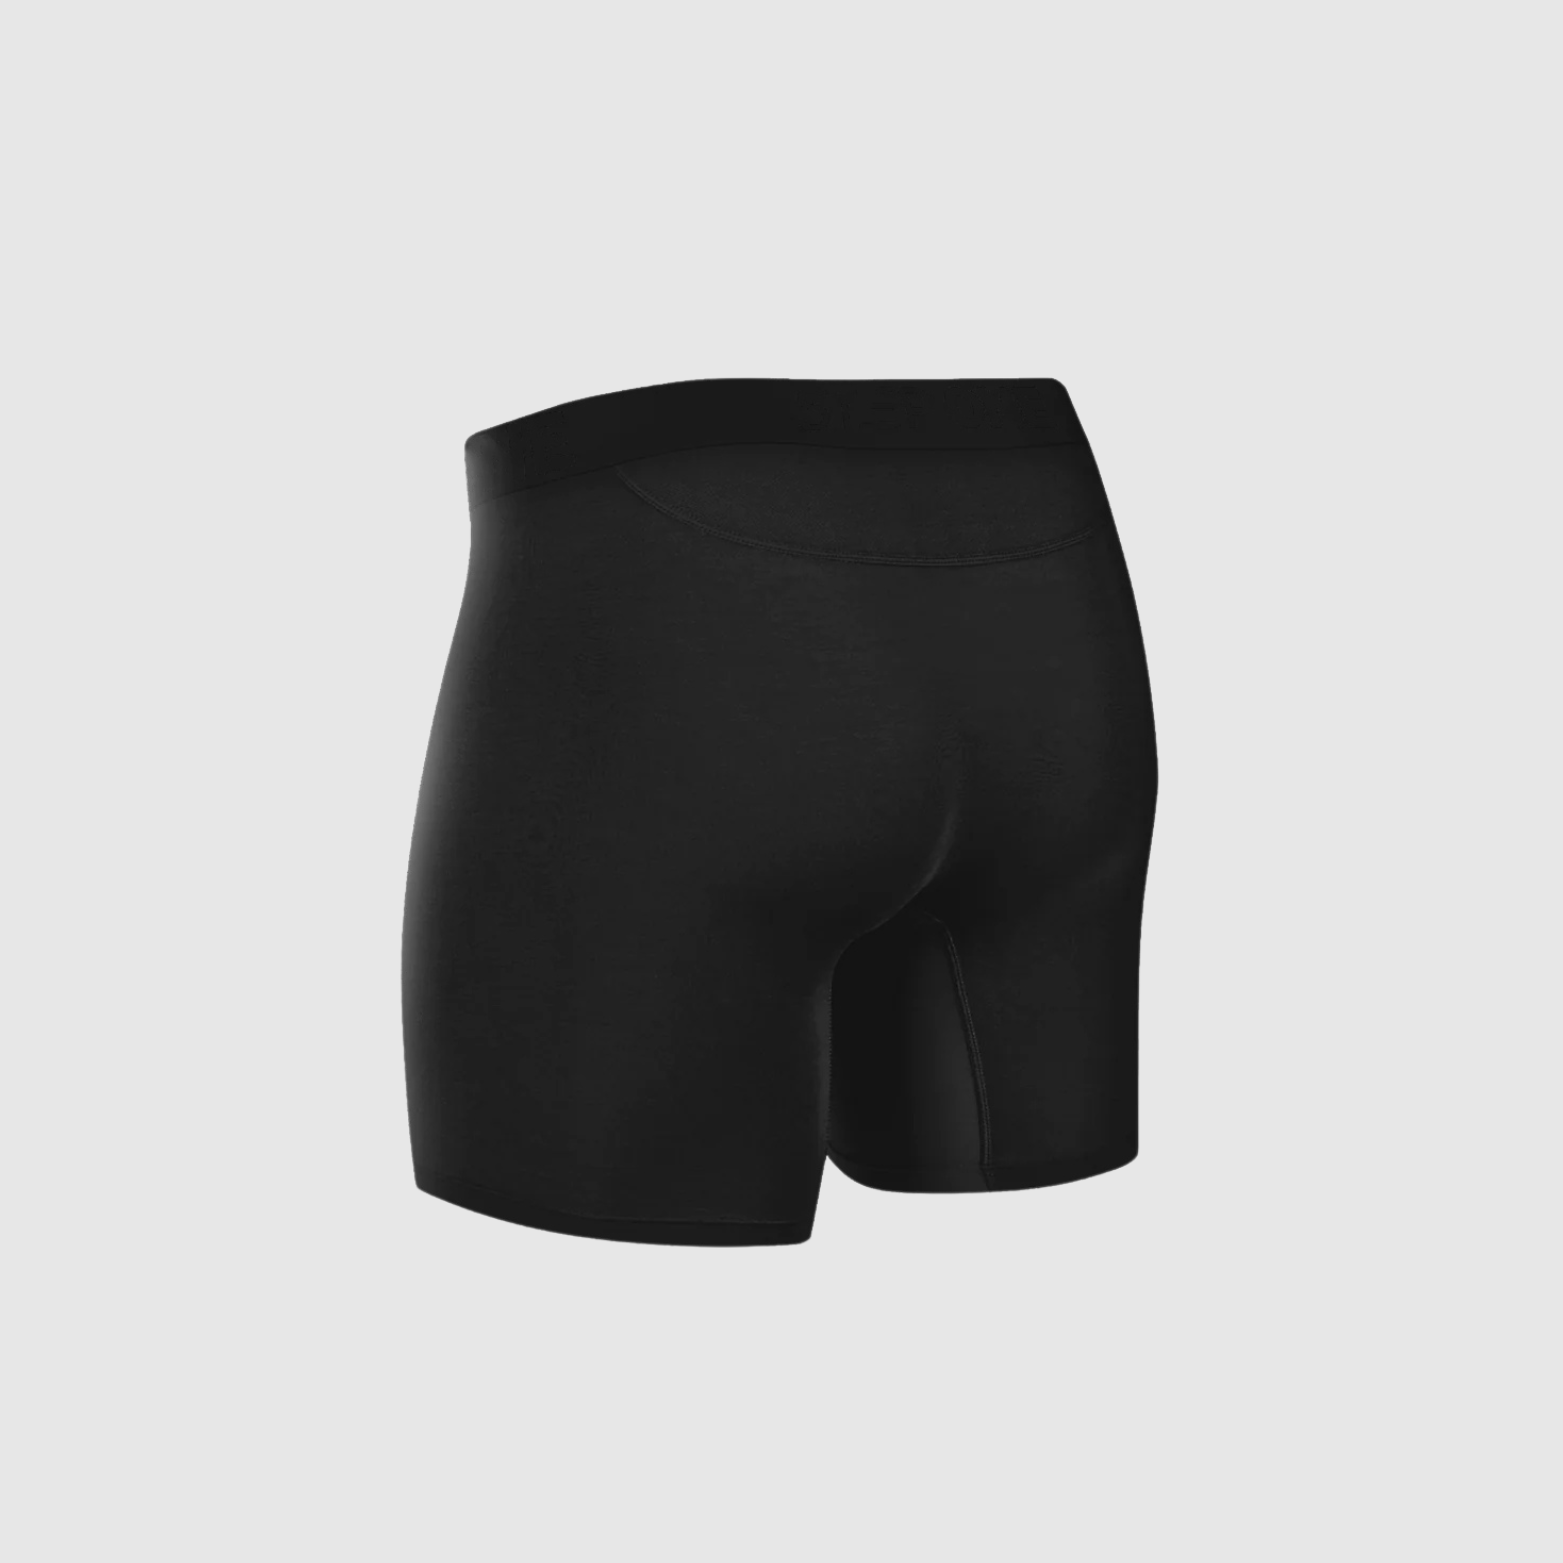 Minions Boxers Custom Photo Boxers Men's Underwear Plain Black Boxers